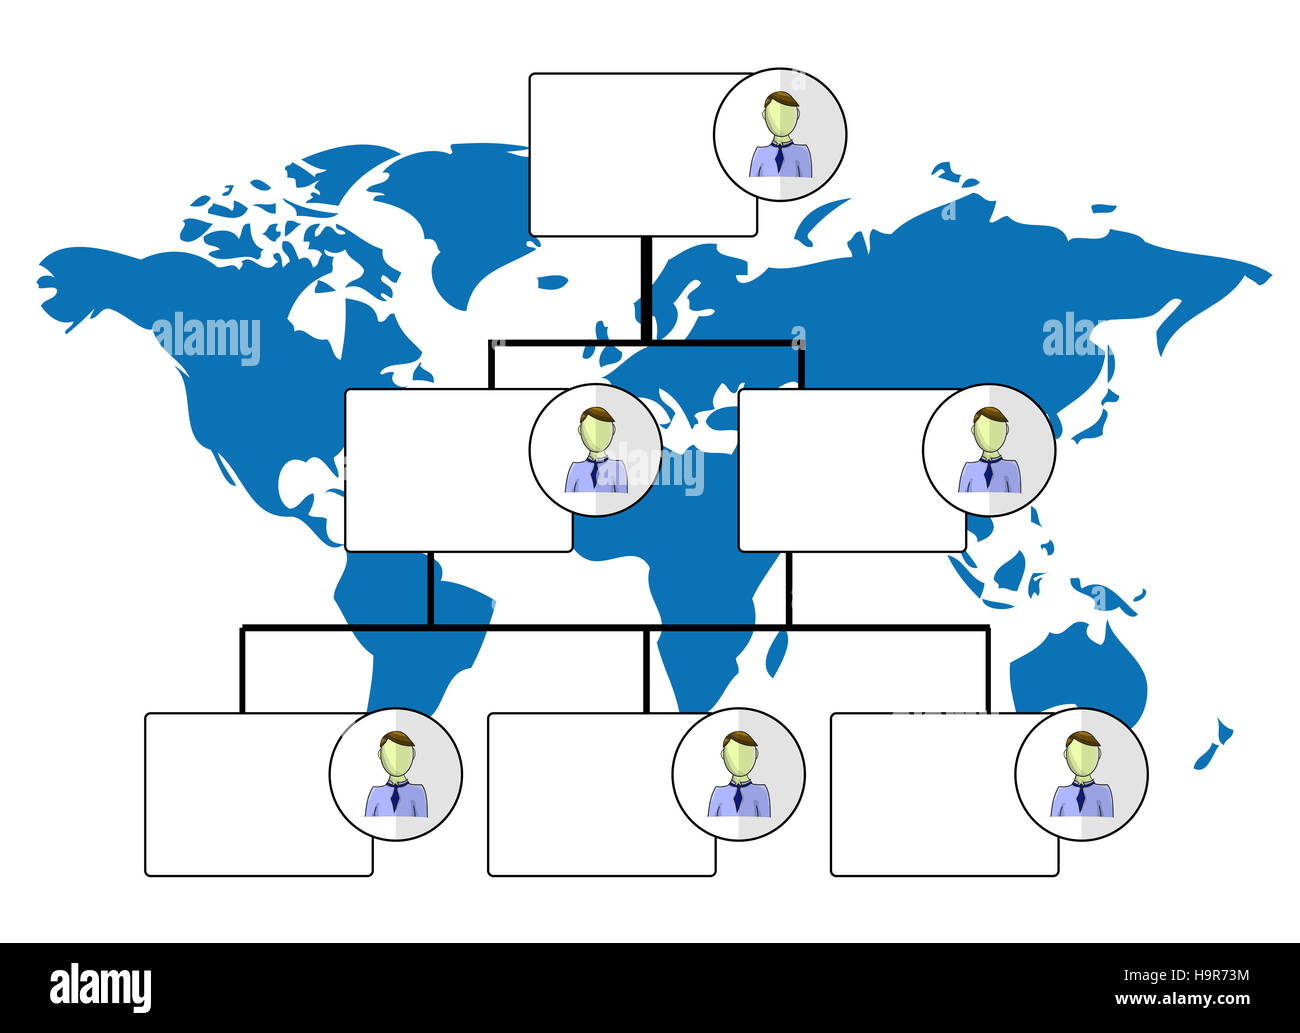 Illustration of organogram with world map Stock Photo